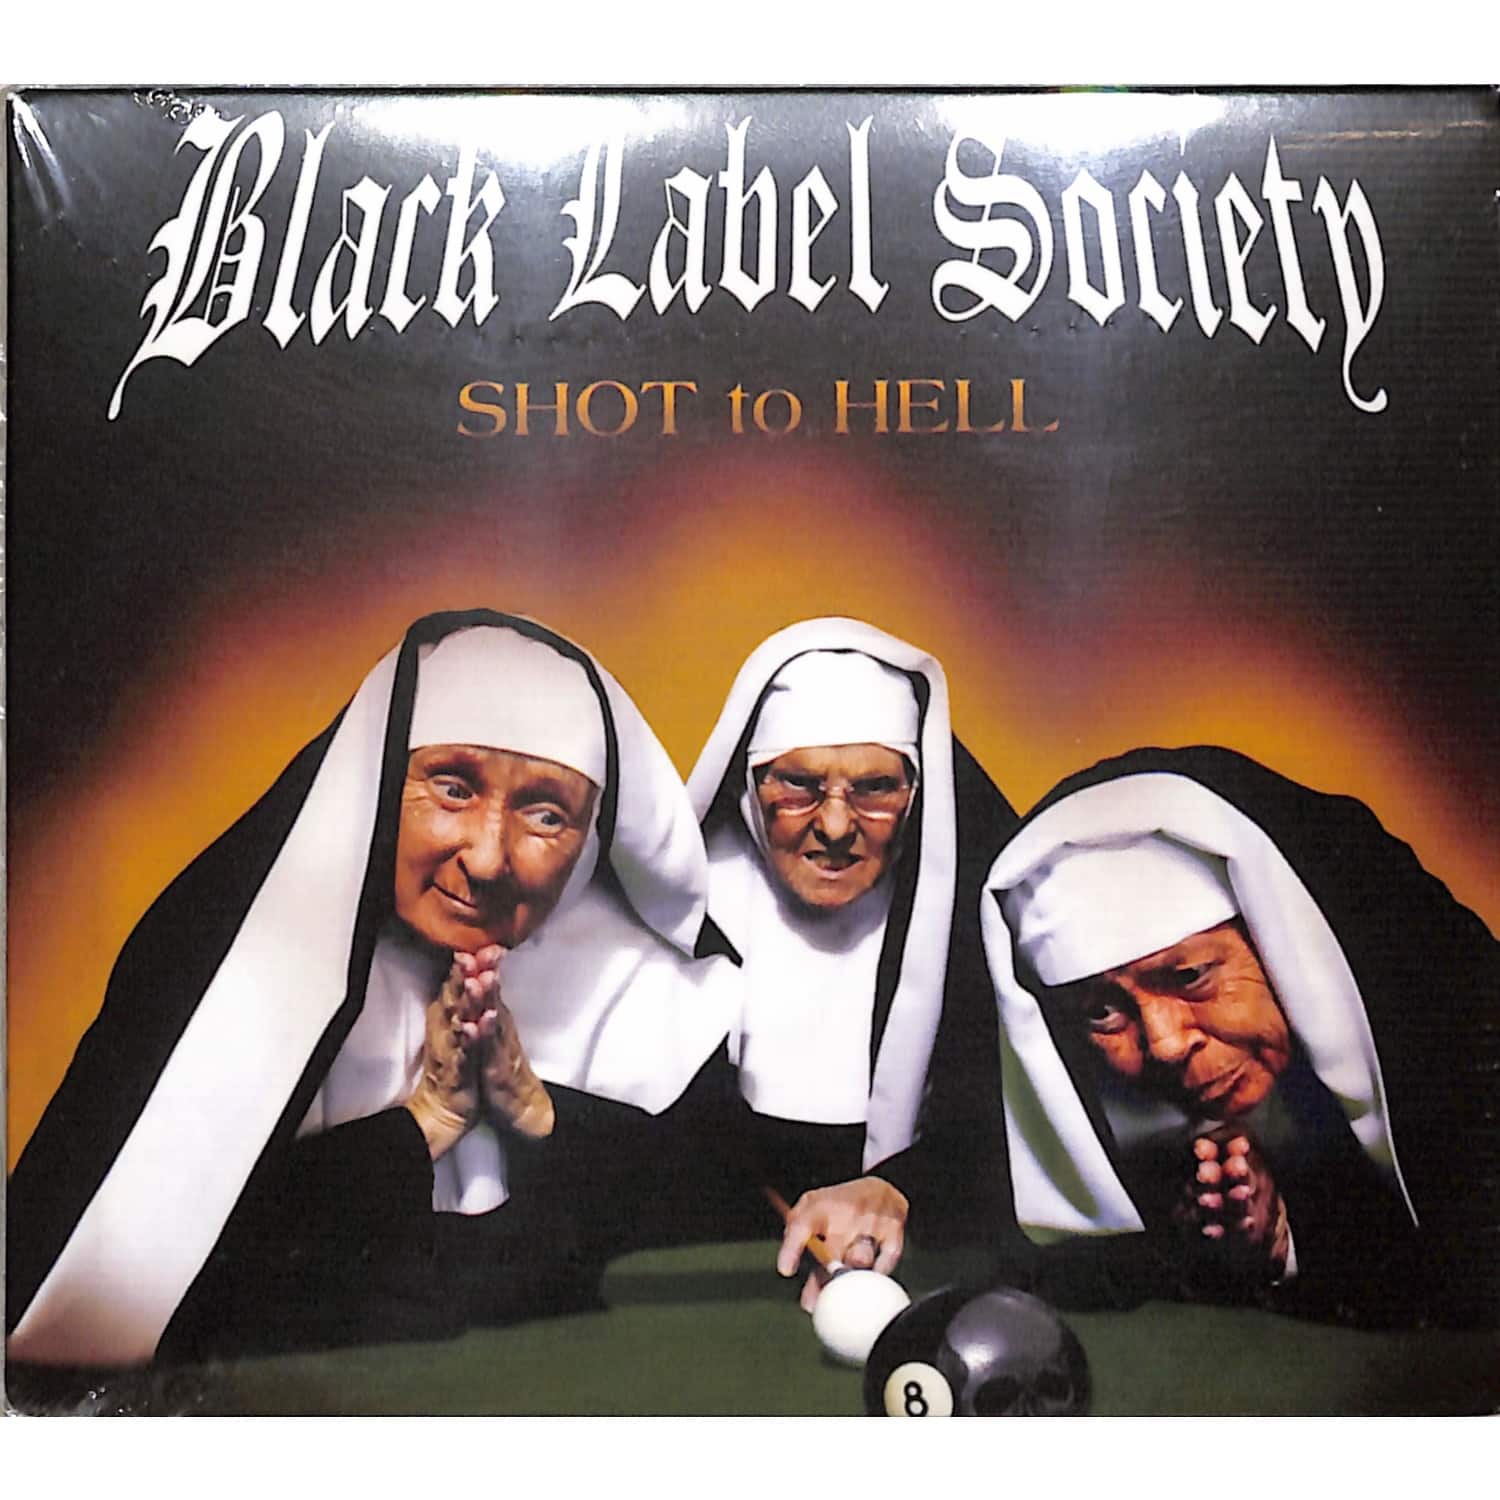 Black Label Society - SHOT TO HELL 